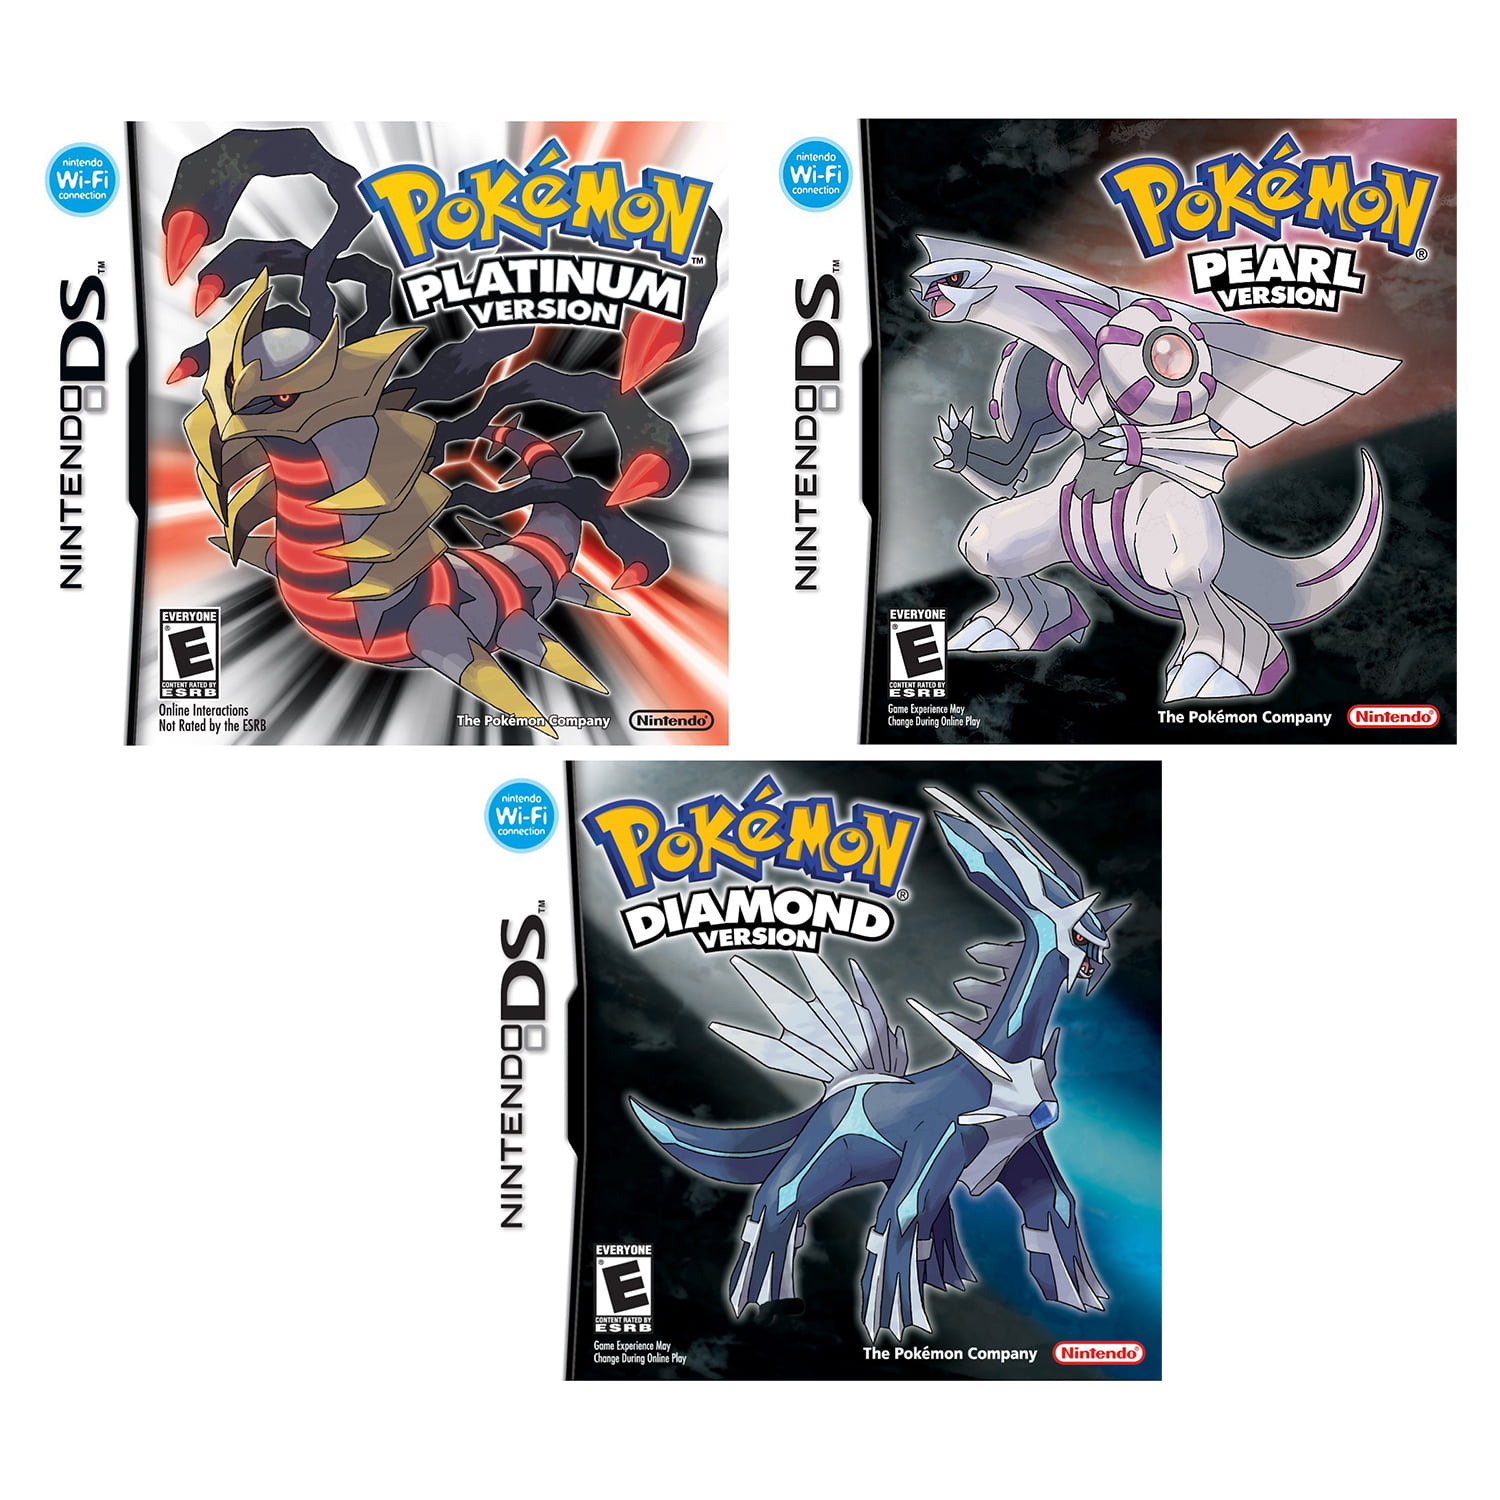 møl Diskret ornament Nintendo DS Pokemon Platinum, Diamond and Pearl Version Video Games Bundle  - All Three Versions! - Walmart.com